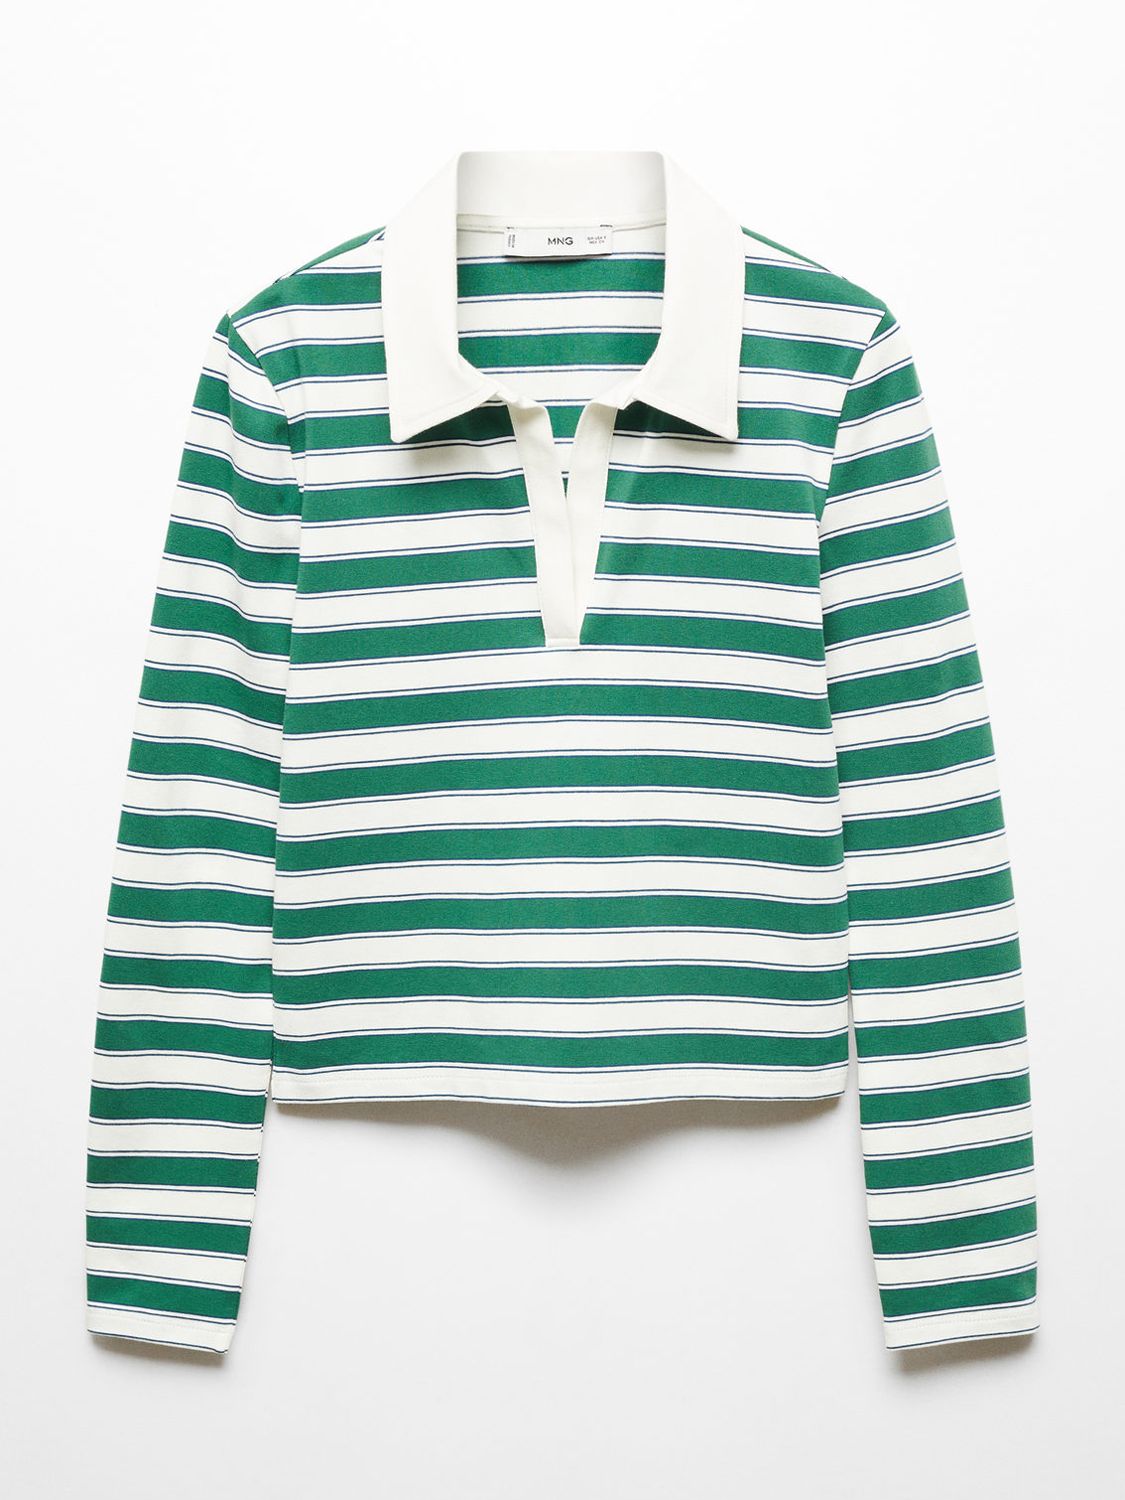 Buy Mango Nut V-neck Striped Polo Shirt, Green/White Online at johnlewis.com